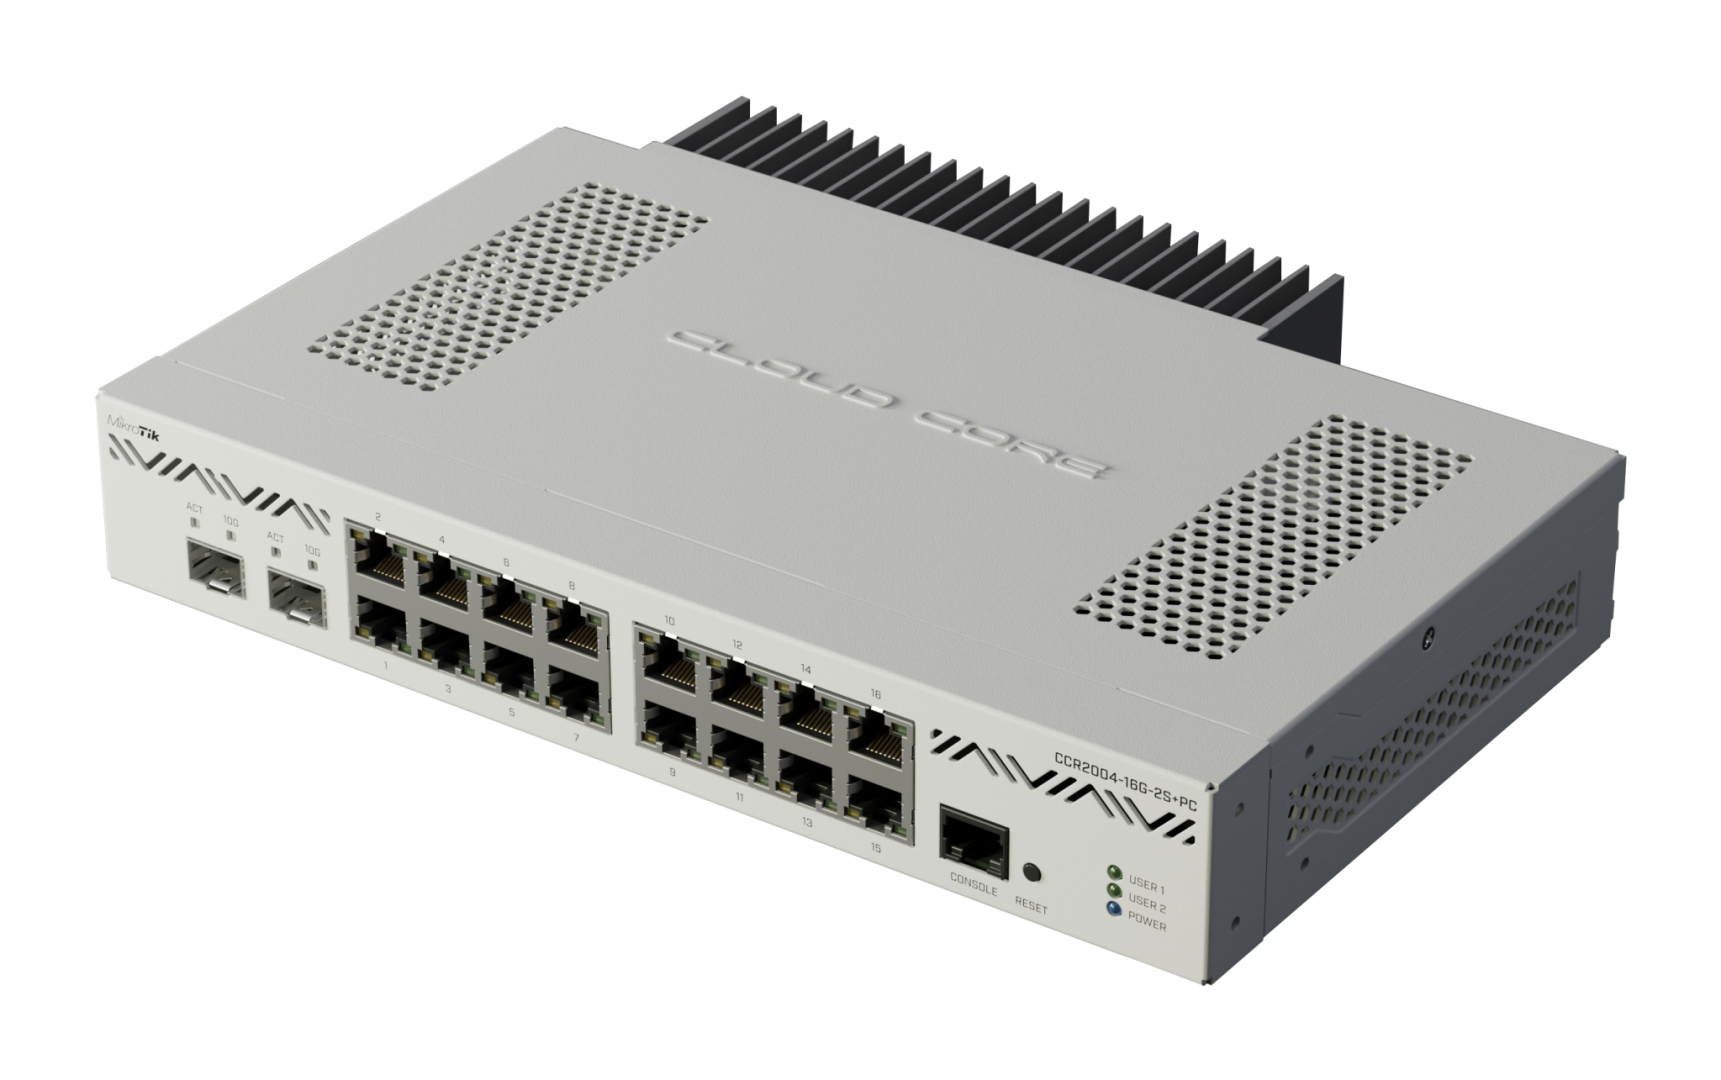 MIKROTIK ETHERNET ROUTER CCR2004-16G-2S+PC, 16 X 10/100/1000, 2XSFP+ Ports, CPU: AL32400 1200Mhz, Dimensiuni: 272 x 195 x 44 mm, Sistem operare:RouterOS v7, 4GB RAM, 128 MB NAND, IP20.